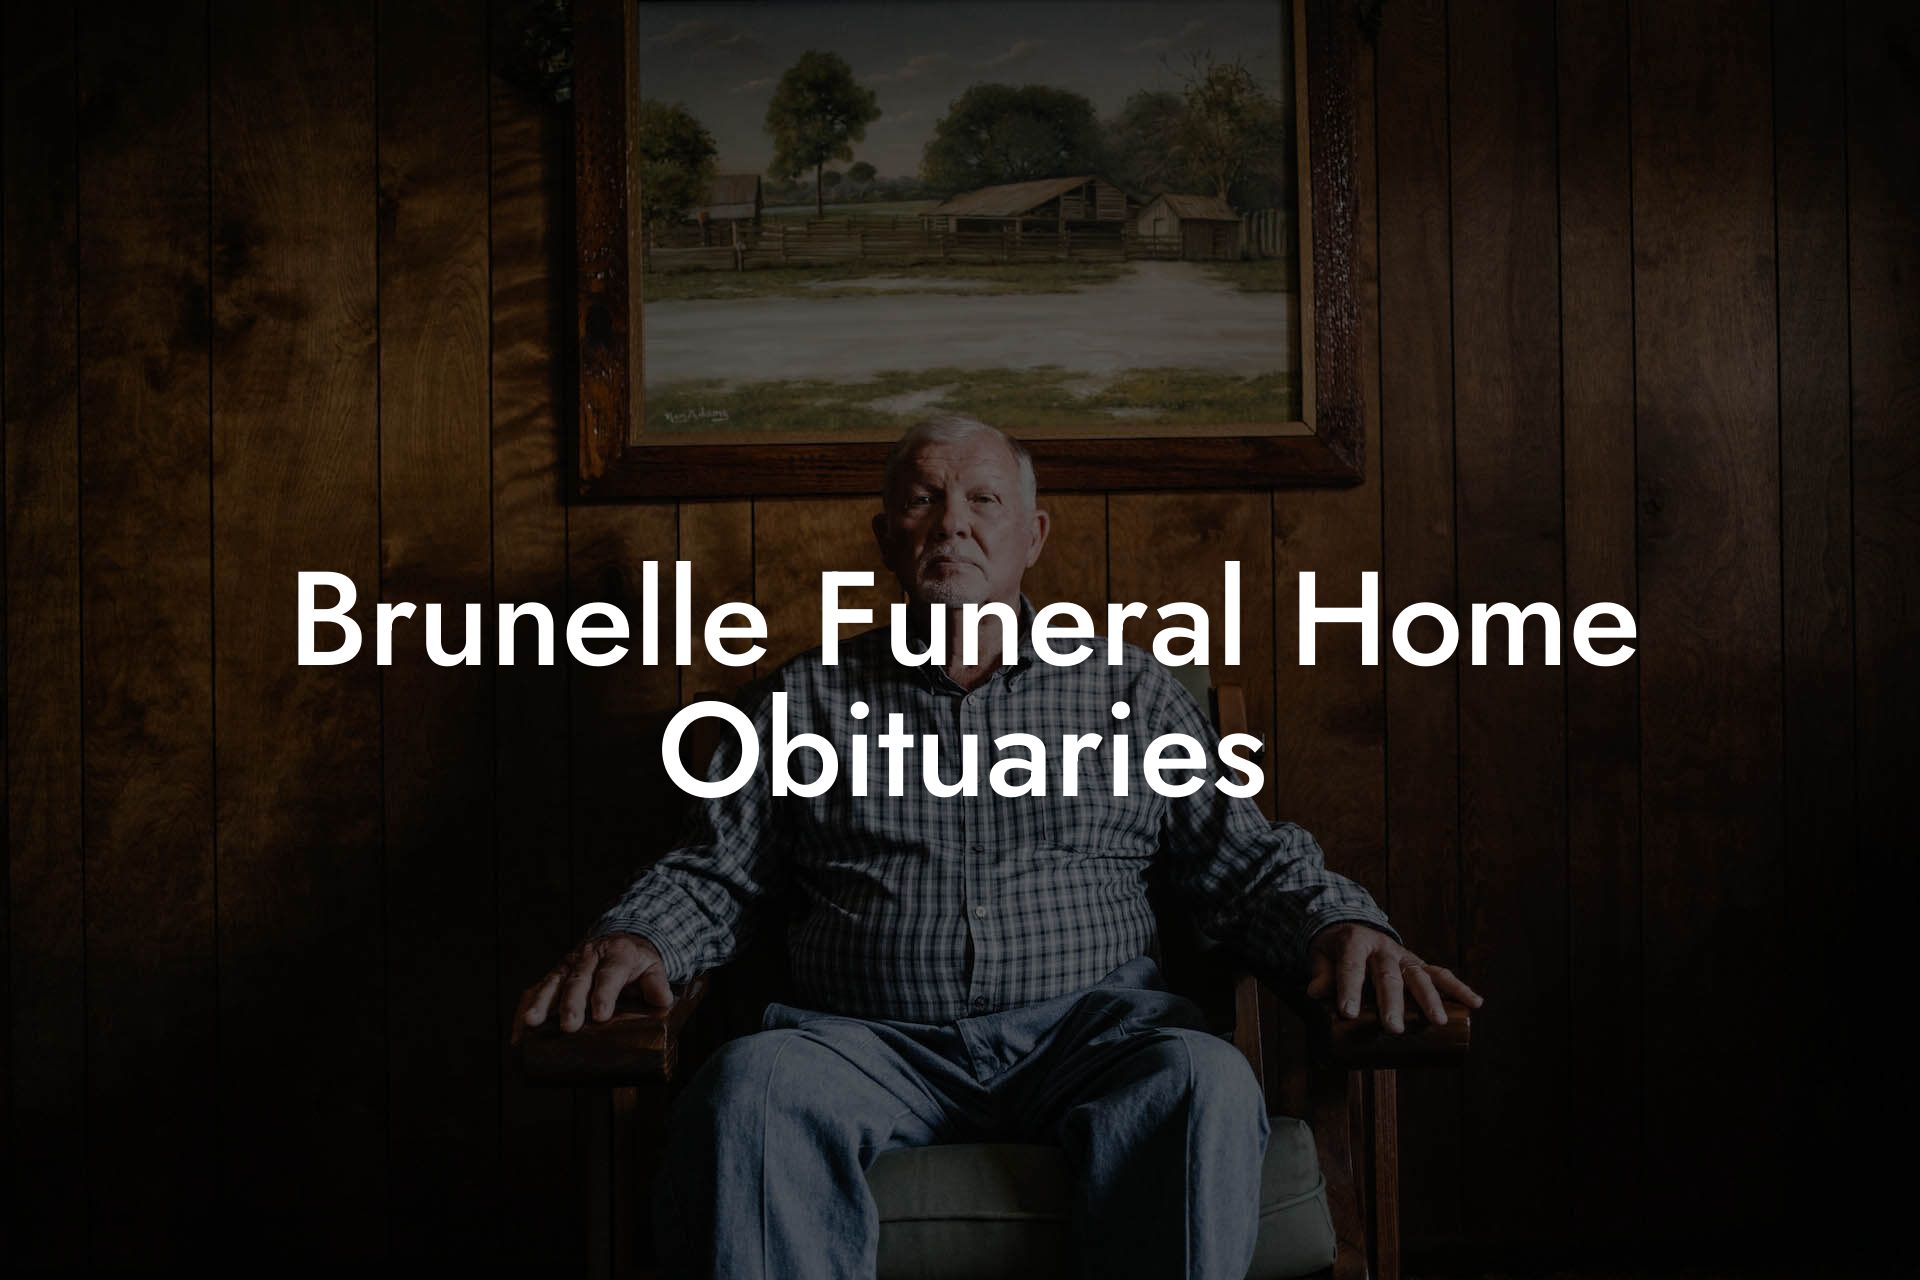 Brunelle Funeral Home Obituaries